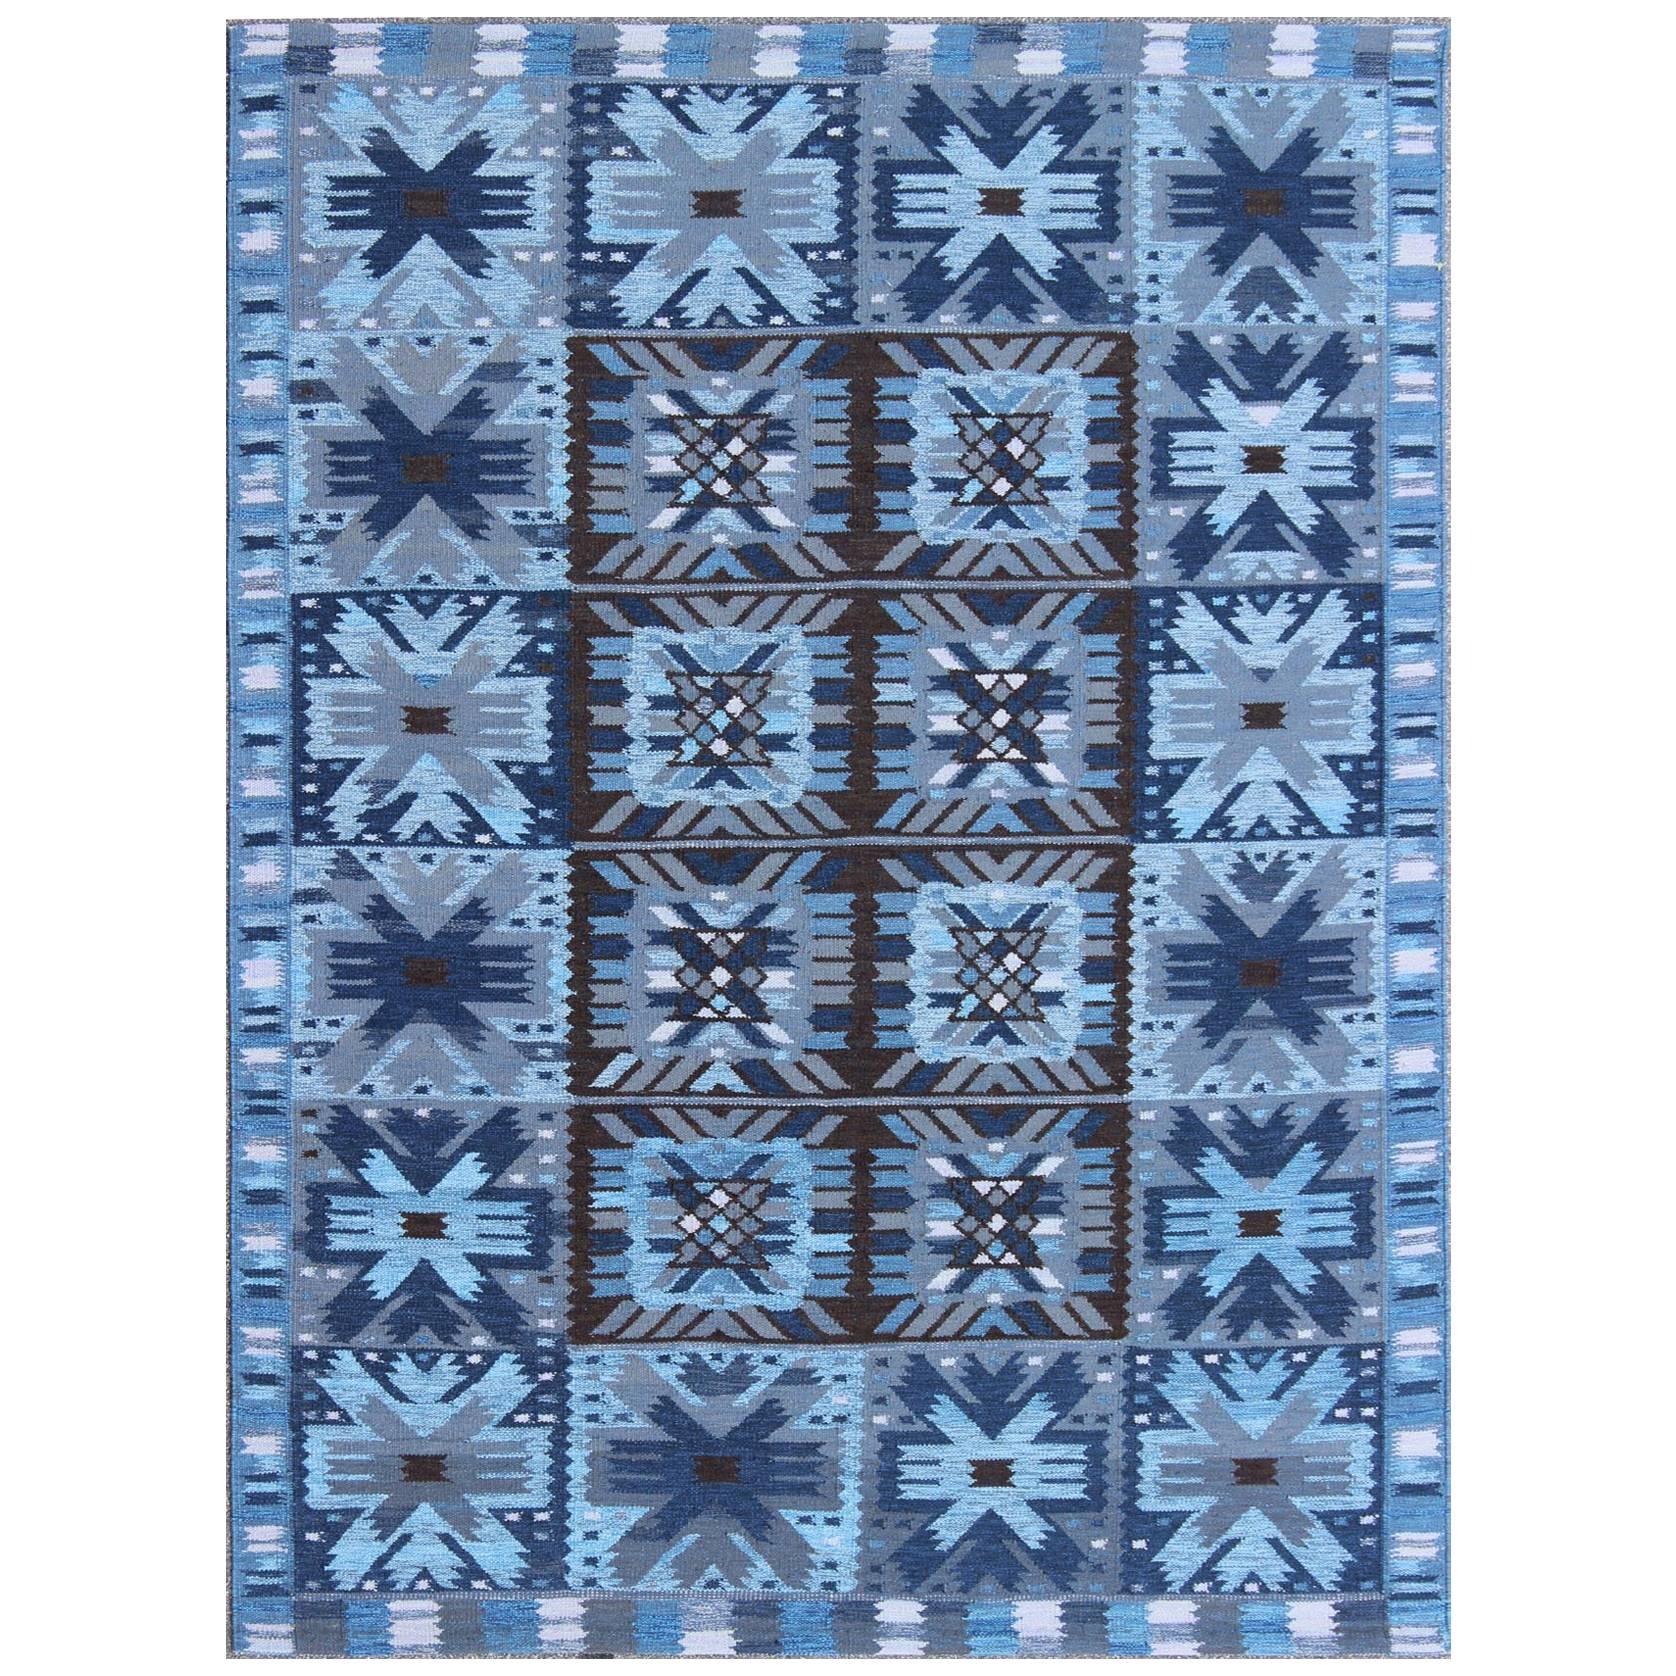 Contemporary Scandinavian Flat-Weave Swedish Design Rug in Blue & Brown Colors